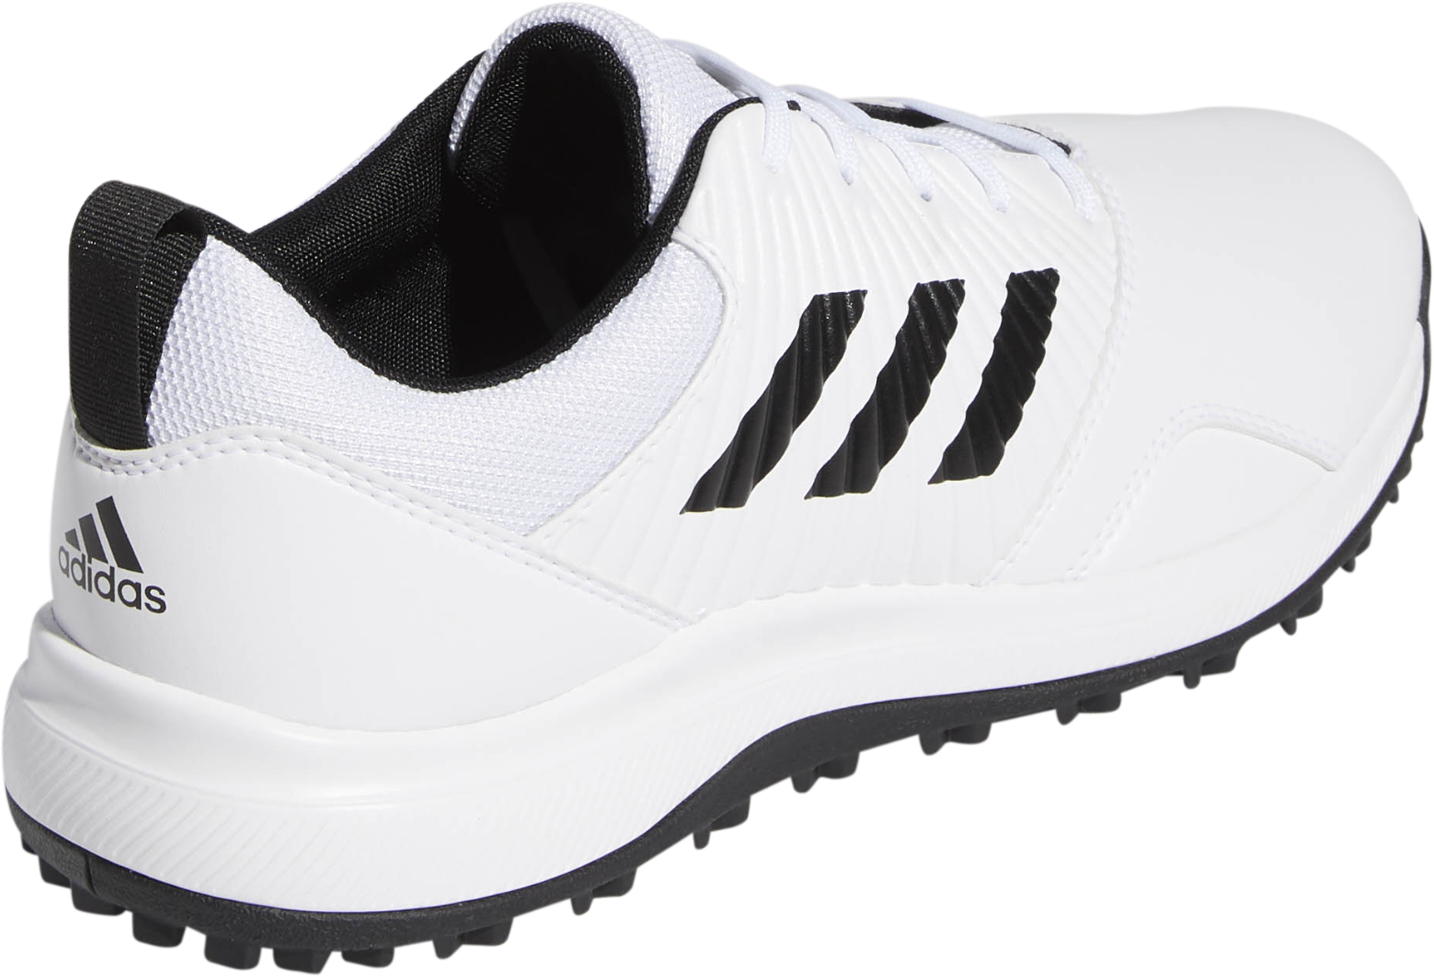 adidas CP Traxion SL Golfschuh, white/black/grey